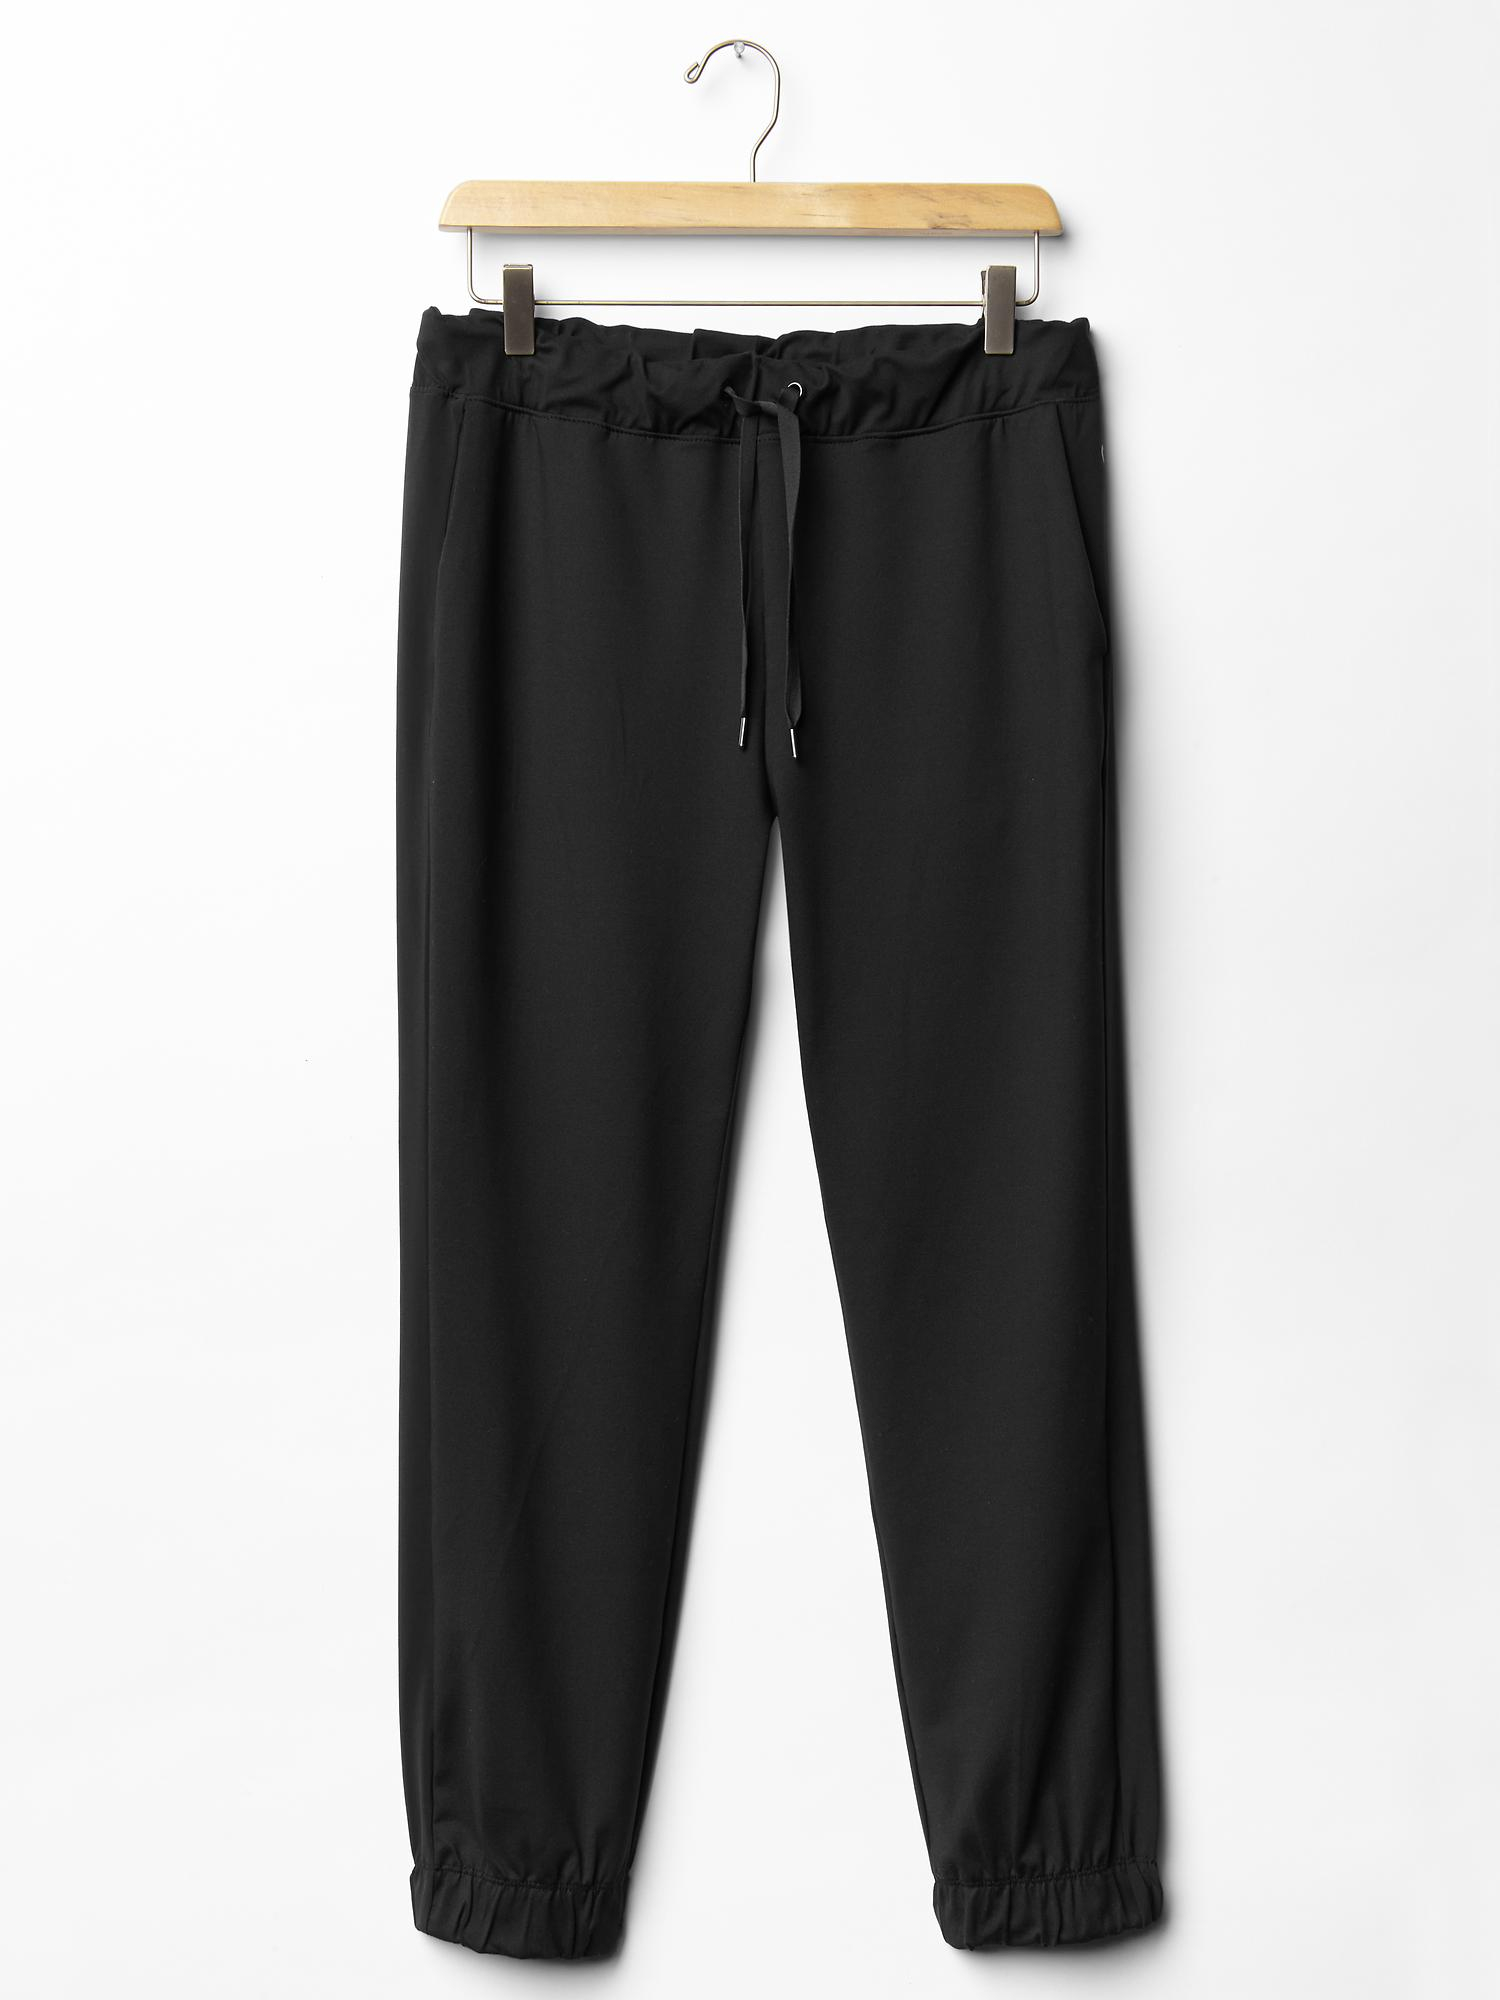 Gap Fit Studio Jogger Pants in Black (true black) | Lyst